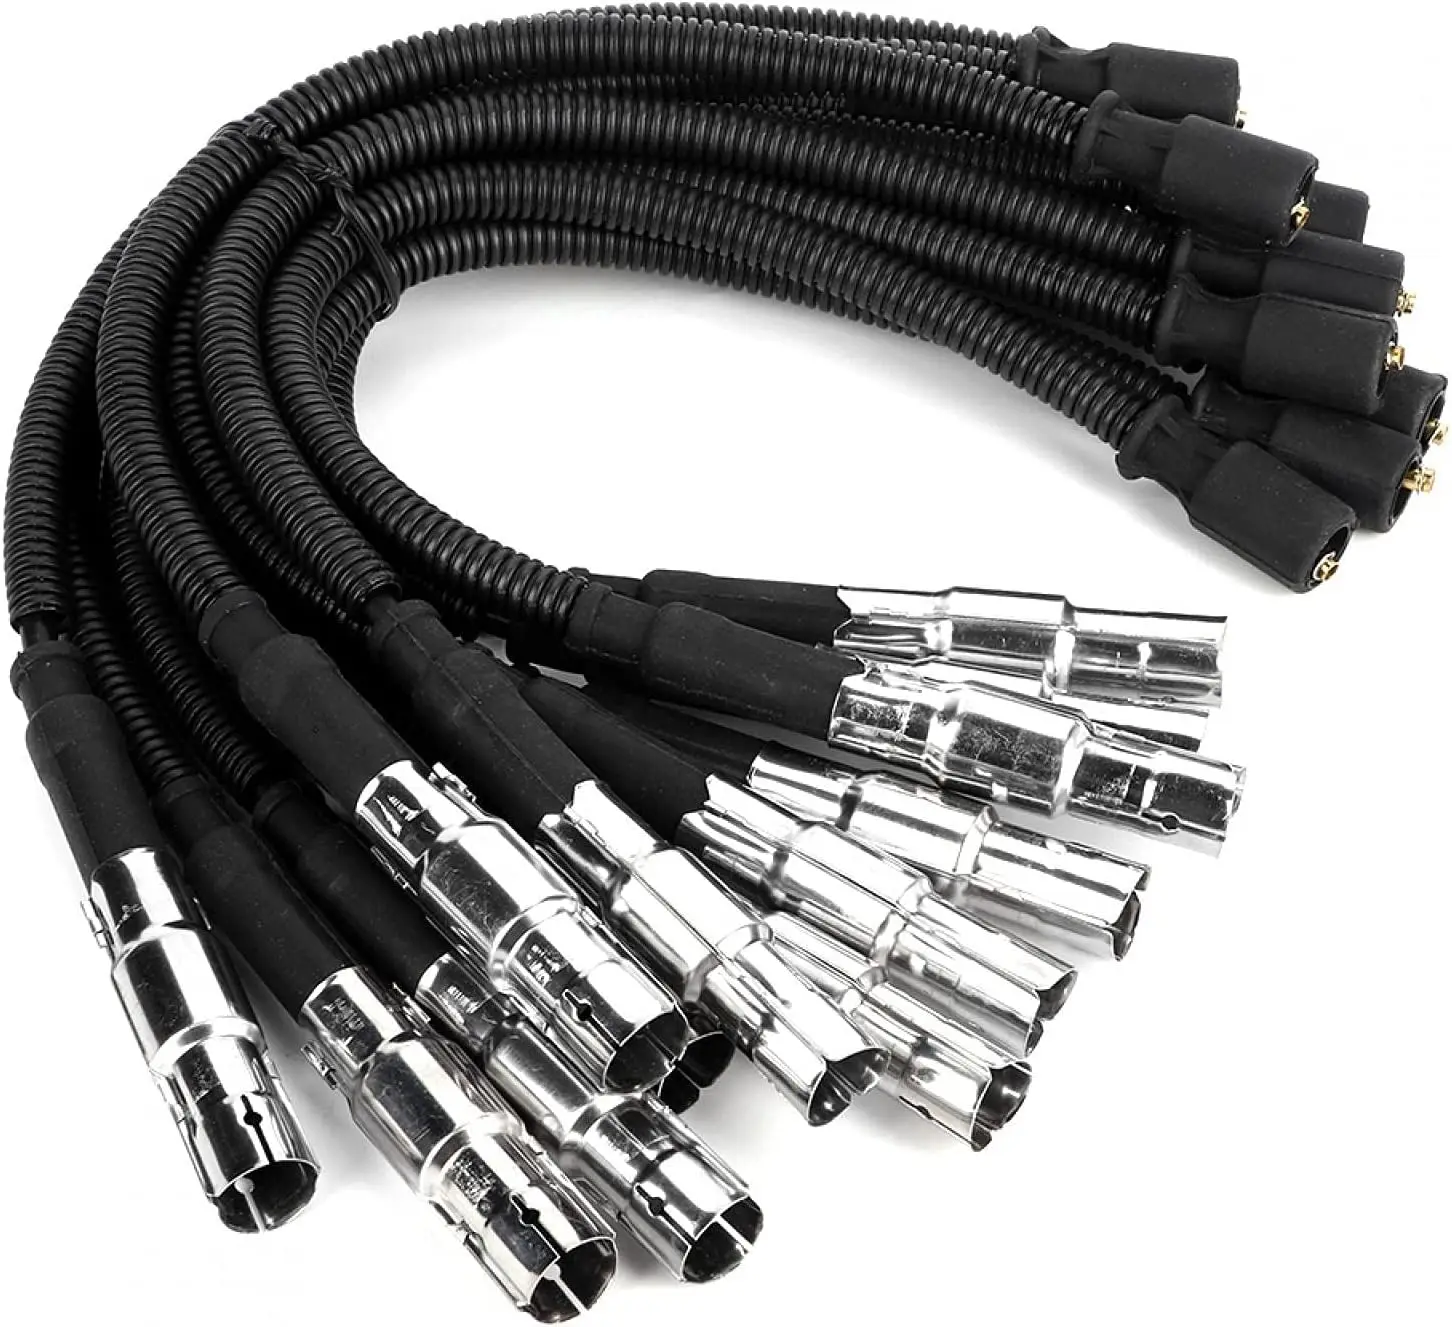 

12 PCS Spark Plug Ignition Wire Set for Mercedes Benz C-Class E-Class ML SLK 320 350 1121500218